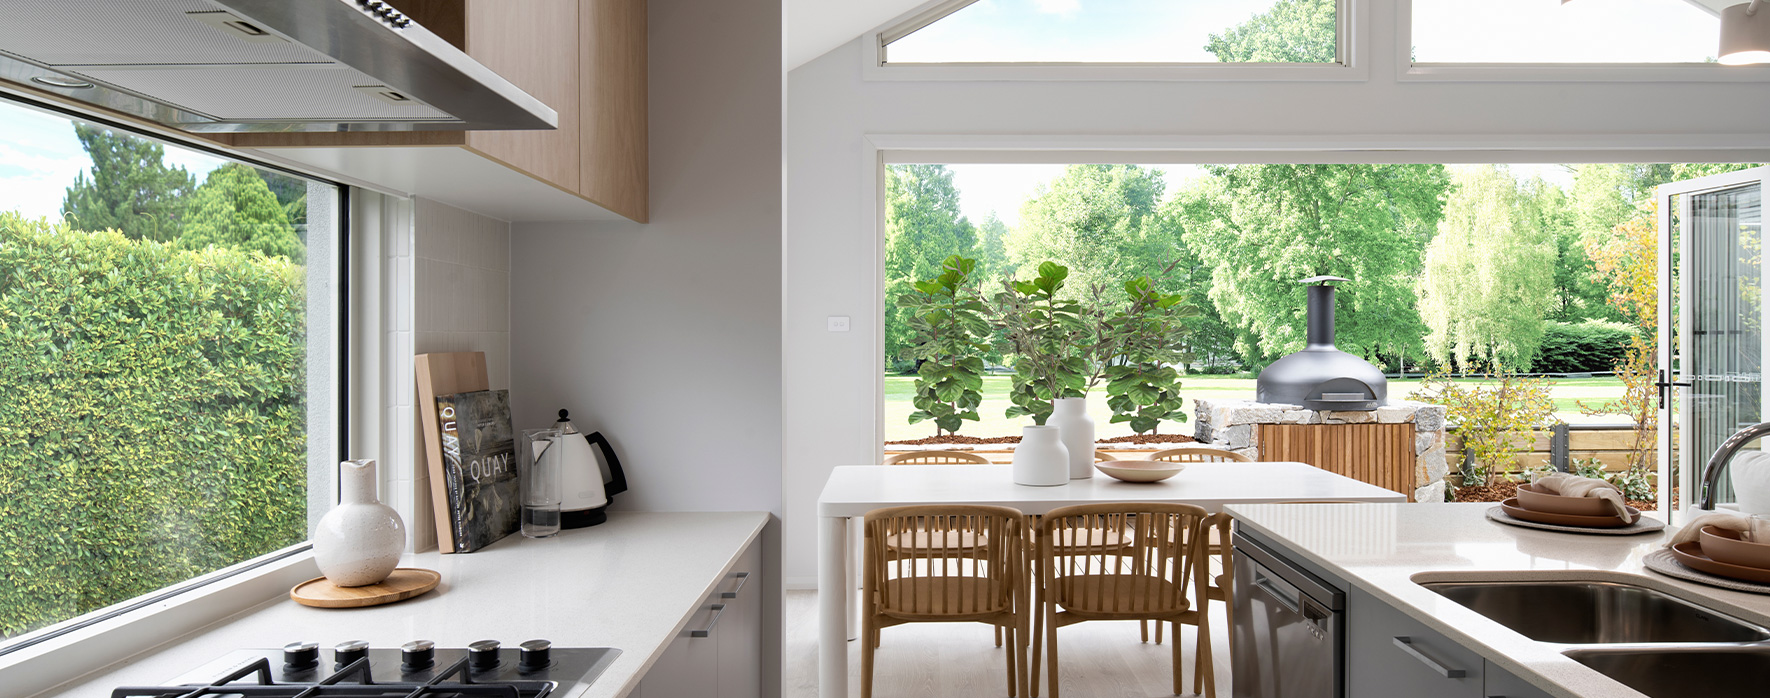 apha-17-homeworld-leppington-single-storey-display-home-kitchen-dining-outdoorliving